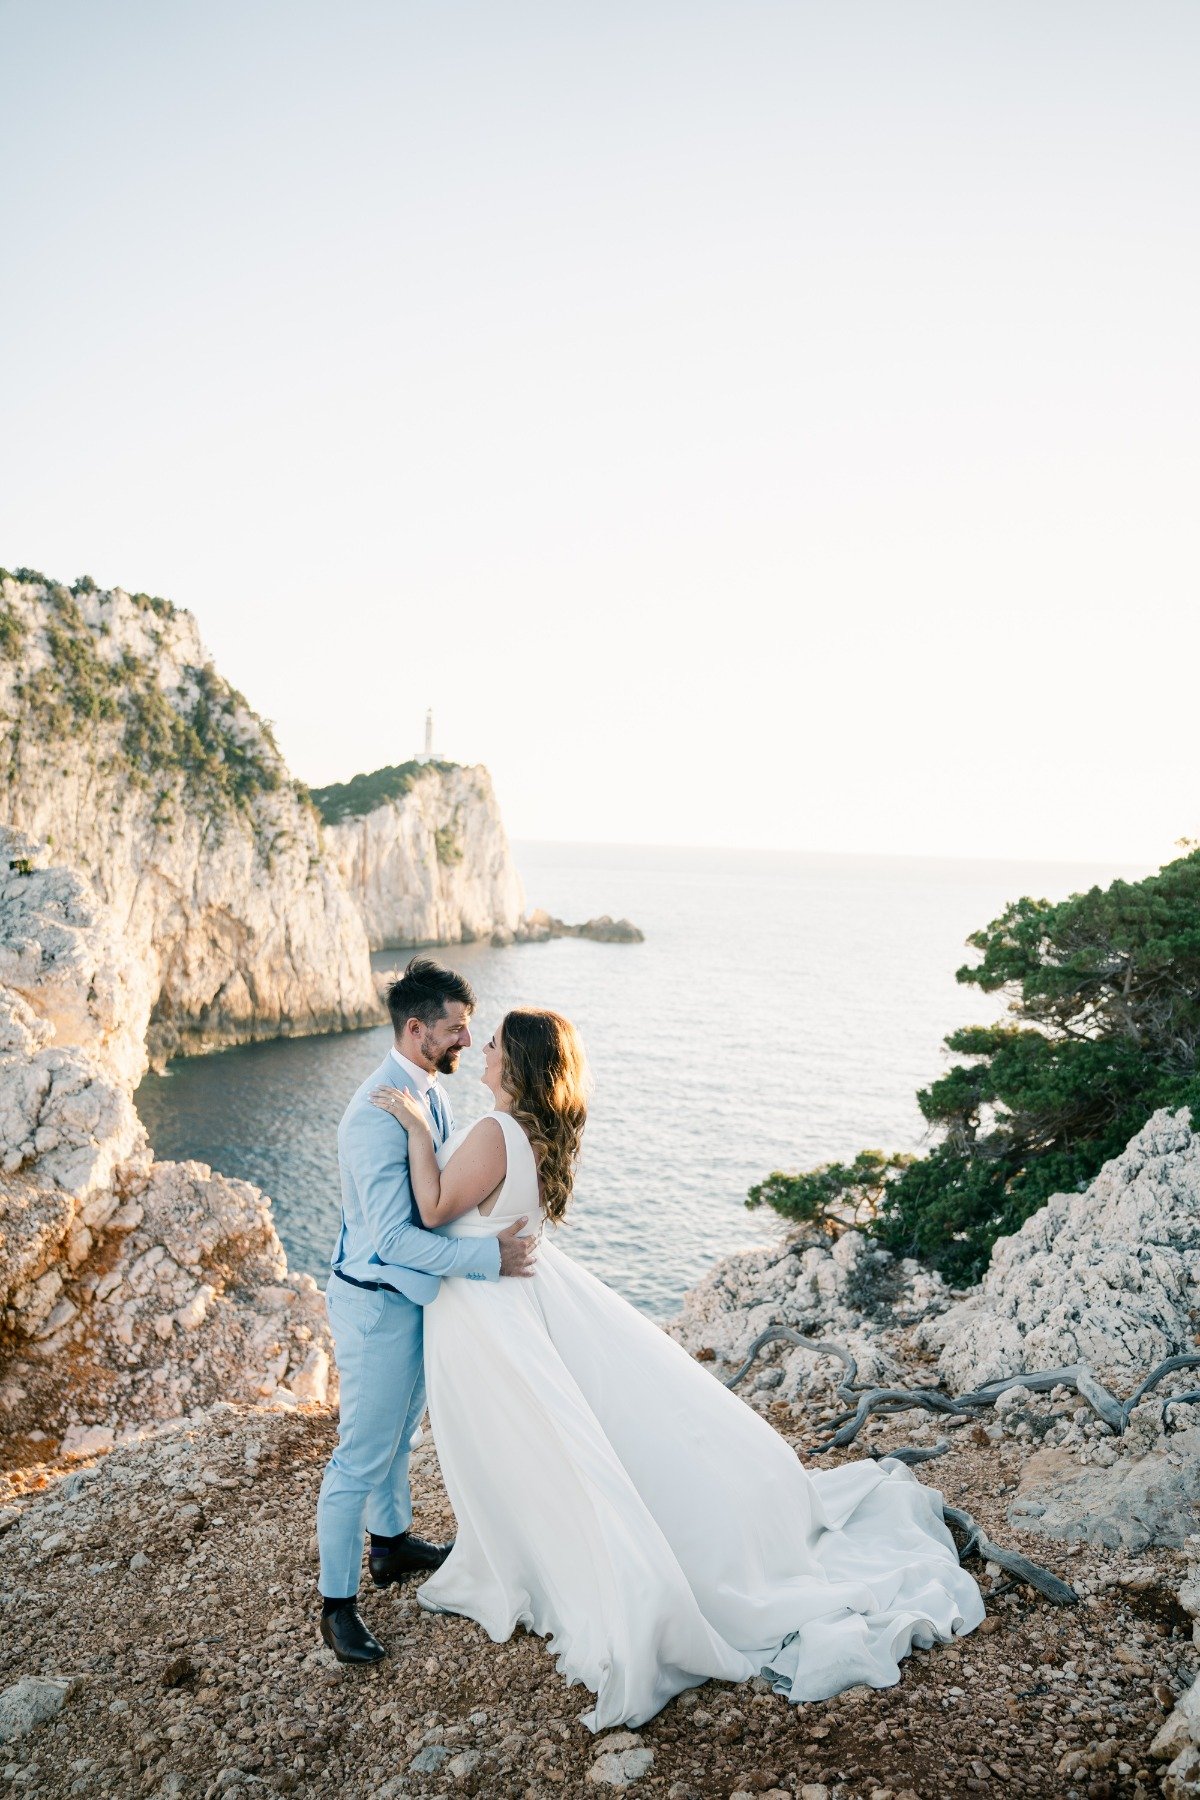 Dreamy sunset destination wedding on Greek Ionian Islands